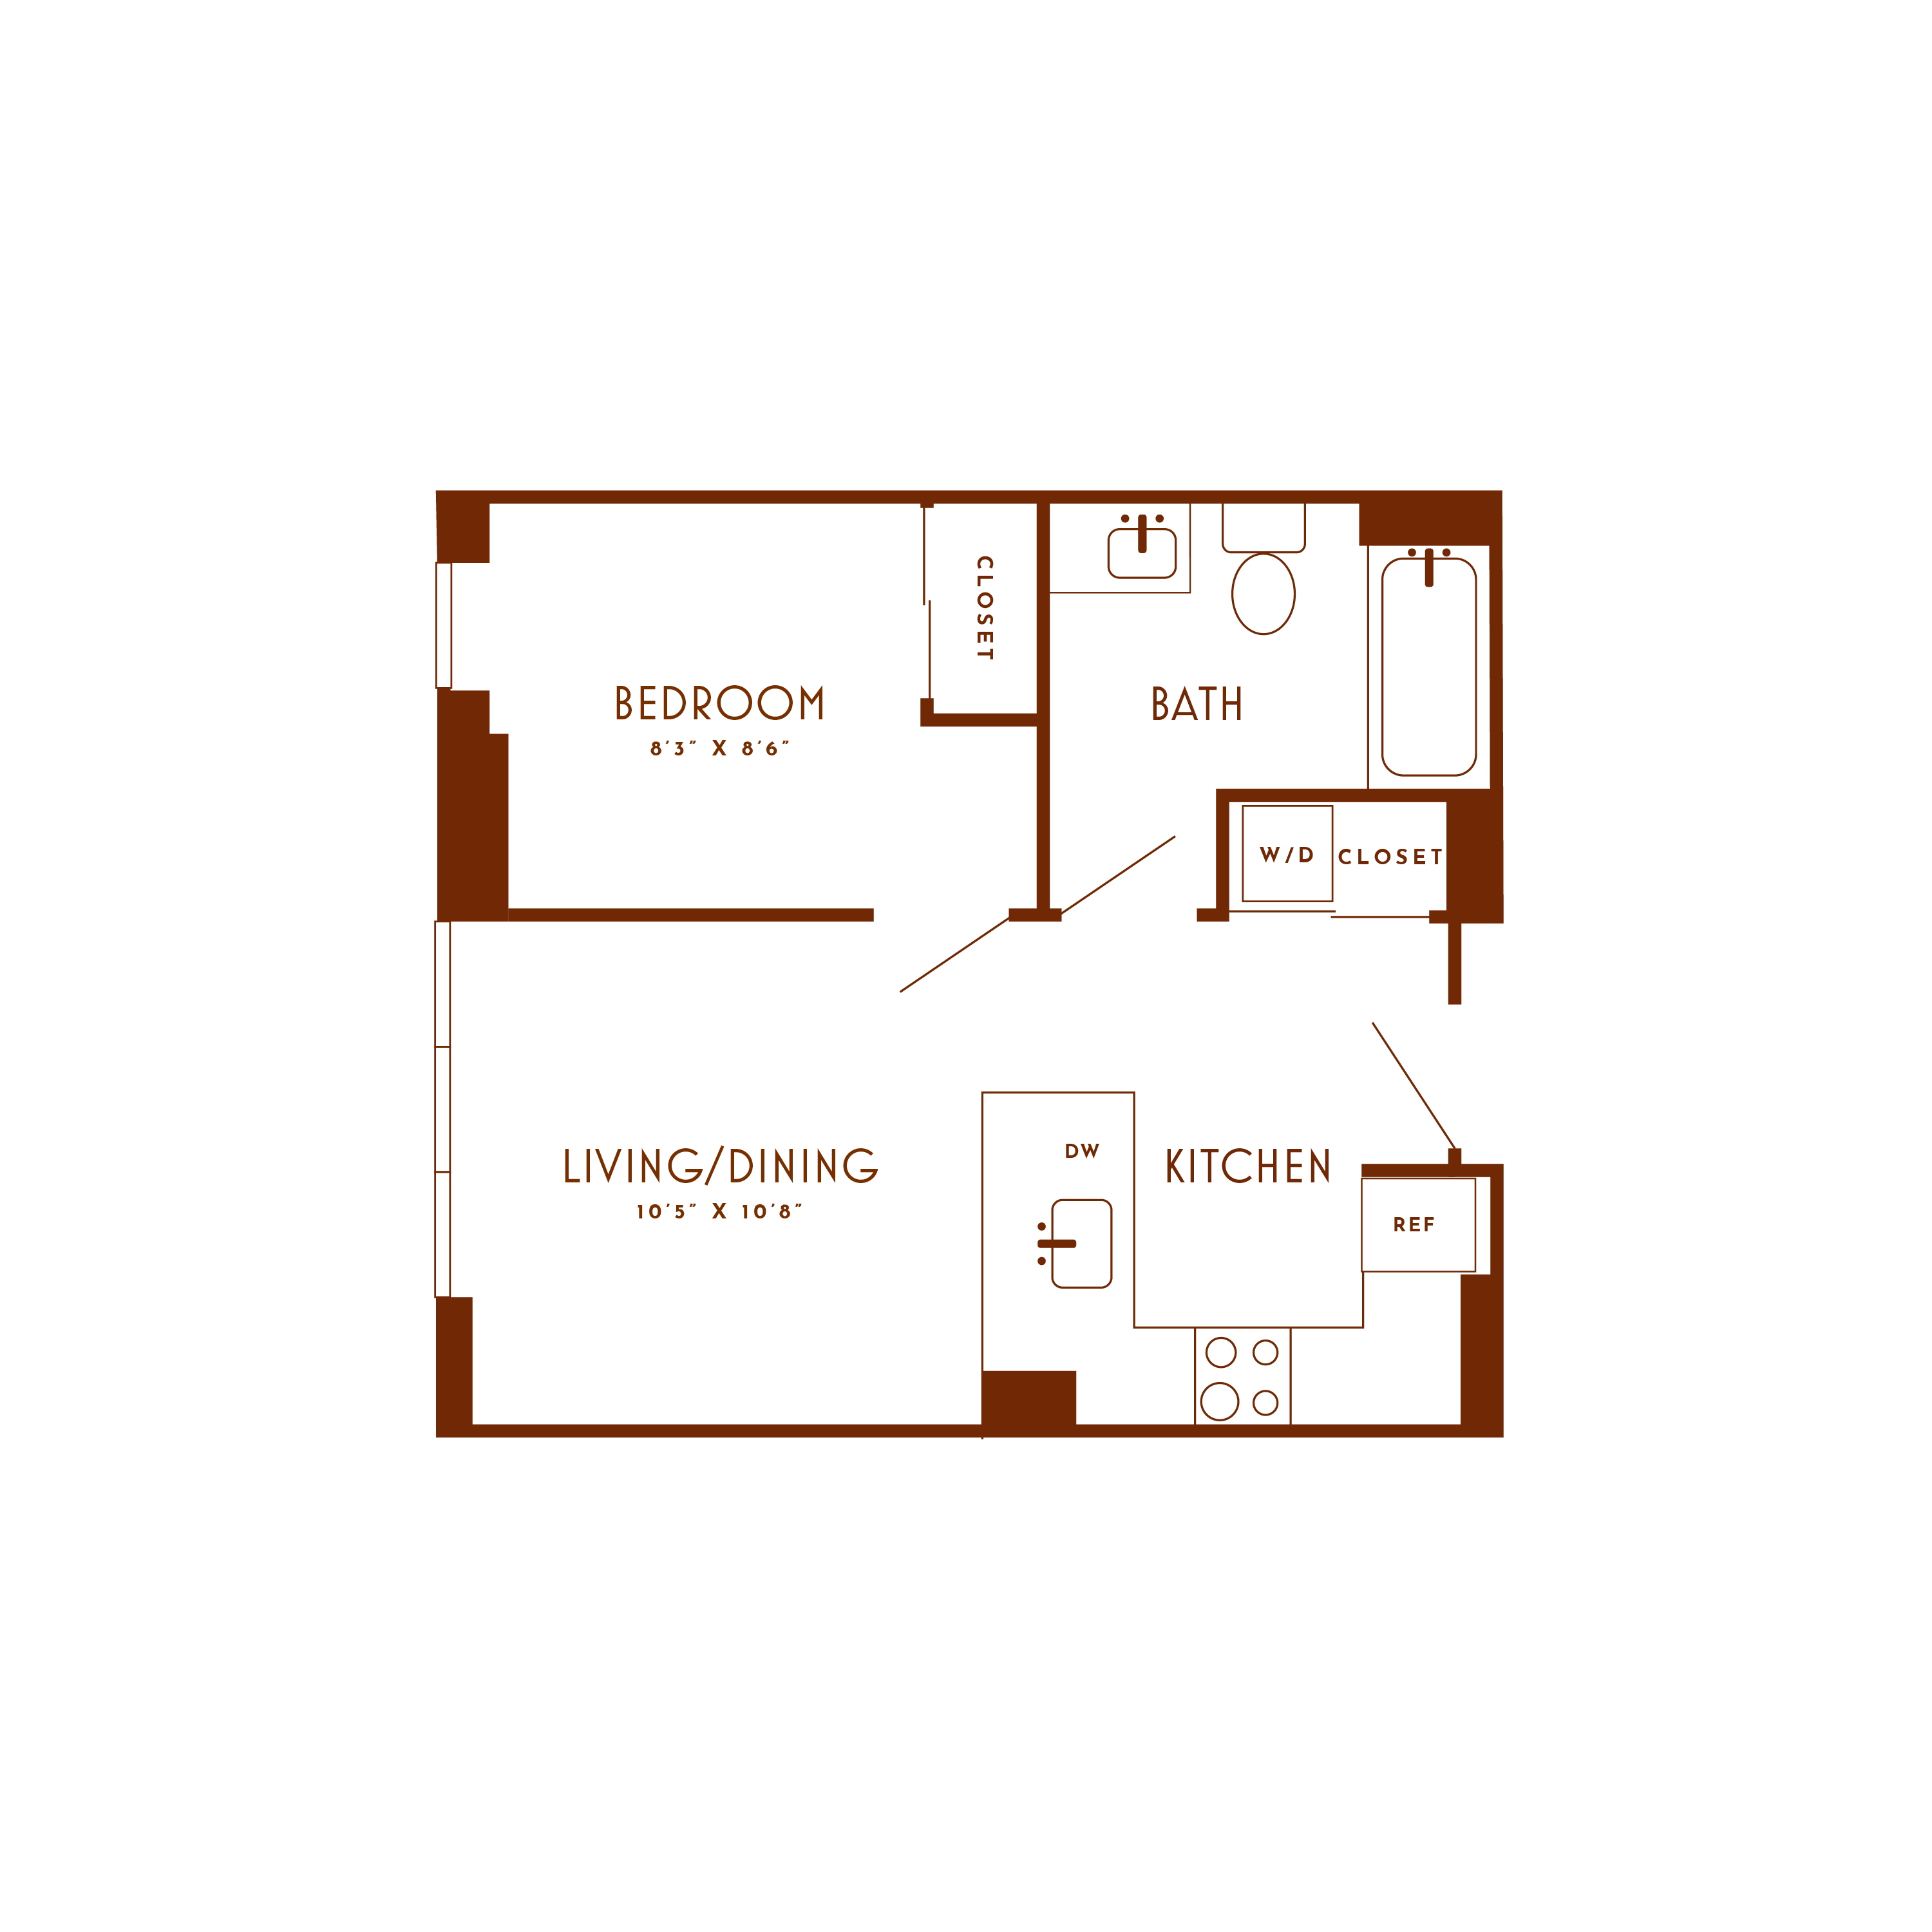 Floor plan image of unit 207